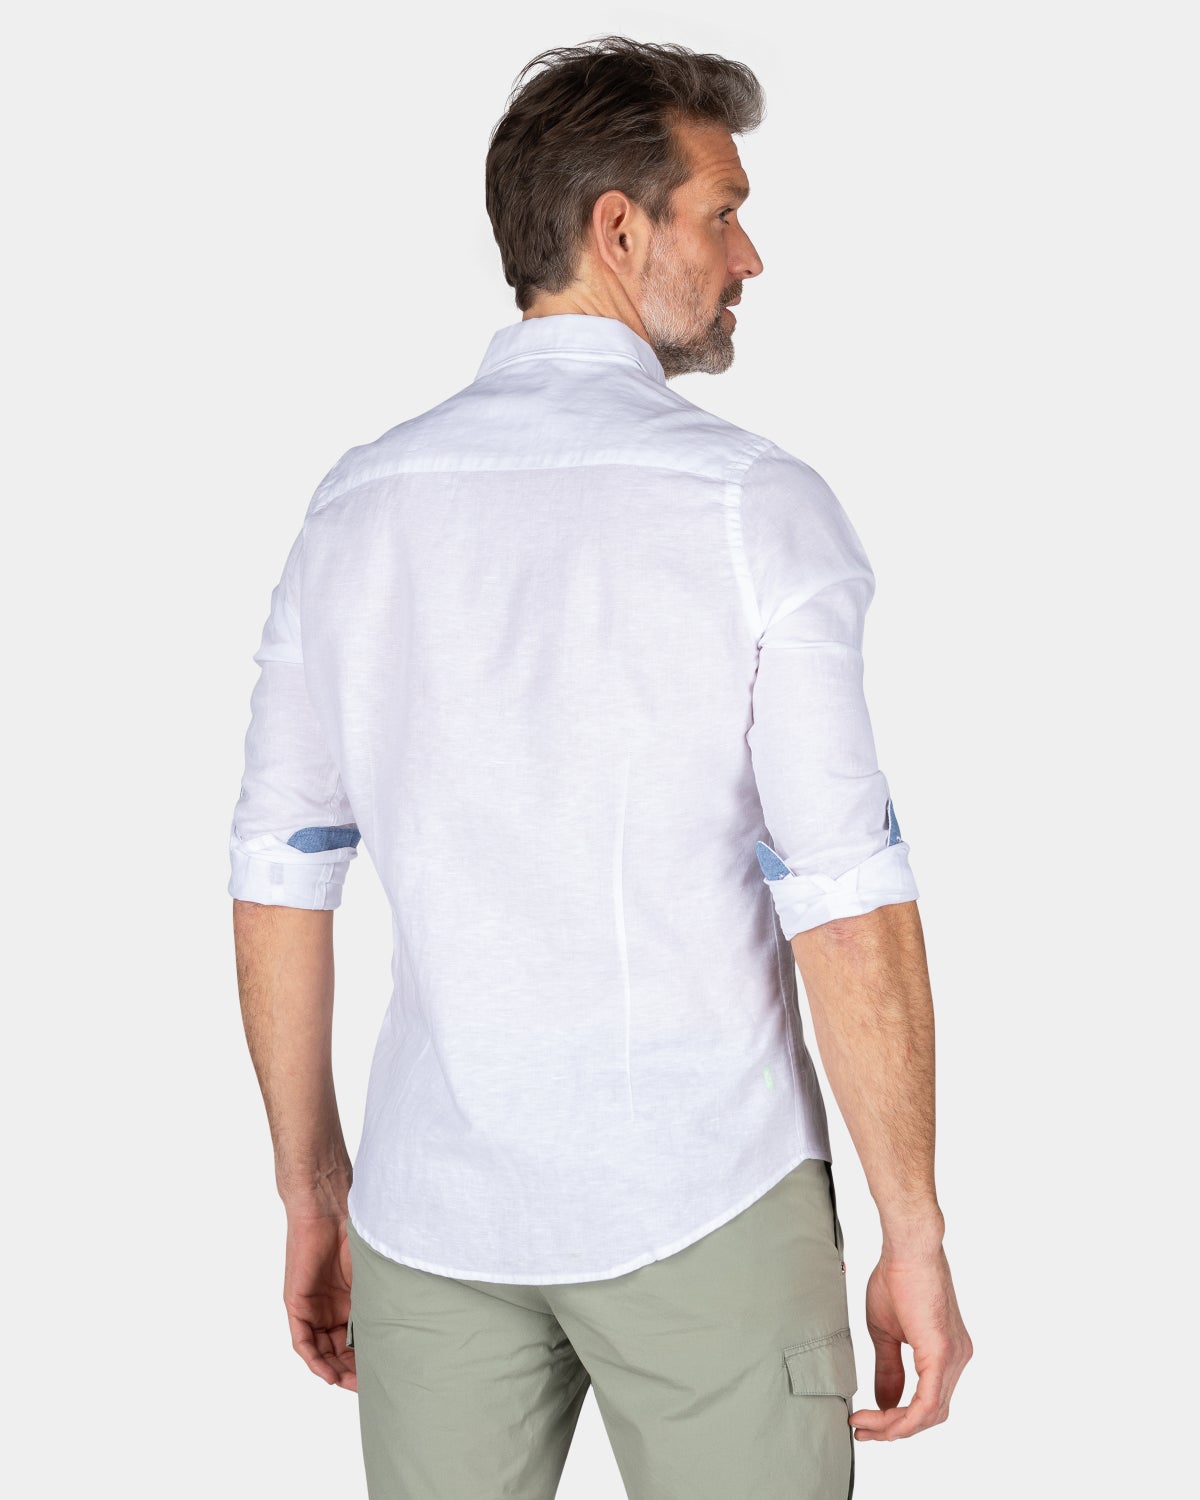 Plain linen shirt in many colors - White